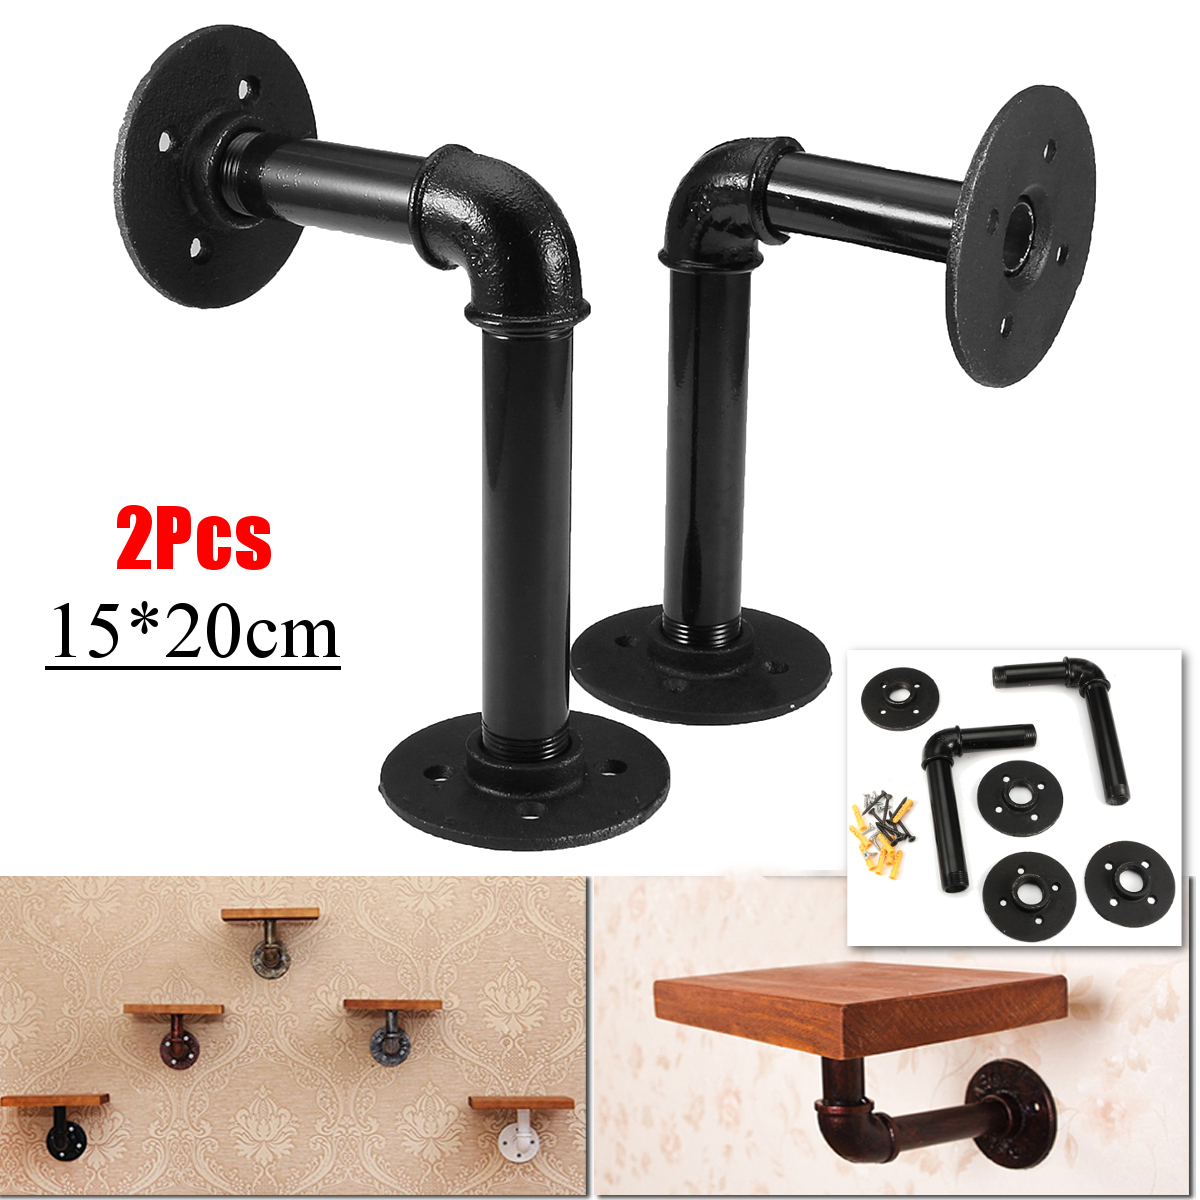 2Pcs-6-Inch-Vintage-Pipe-Shelf-Bracket-Black-Industrial-Rustic-Iron-Pipe-for-DIY-Shelf-Wall-1154831-1